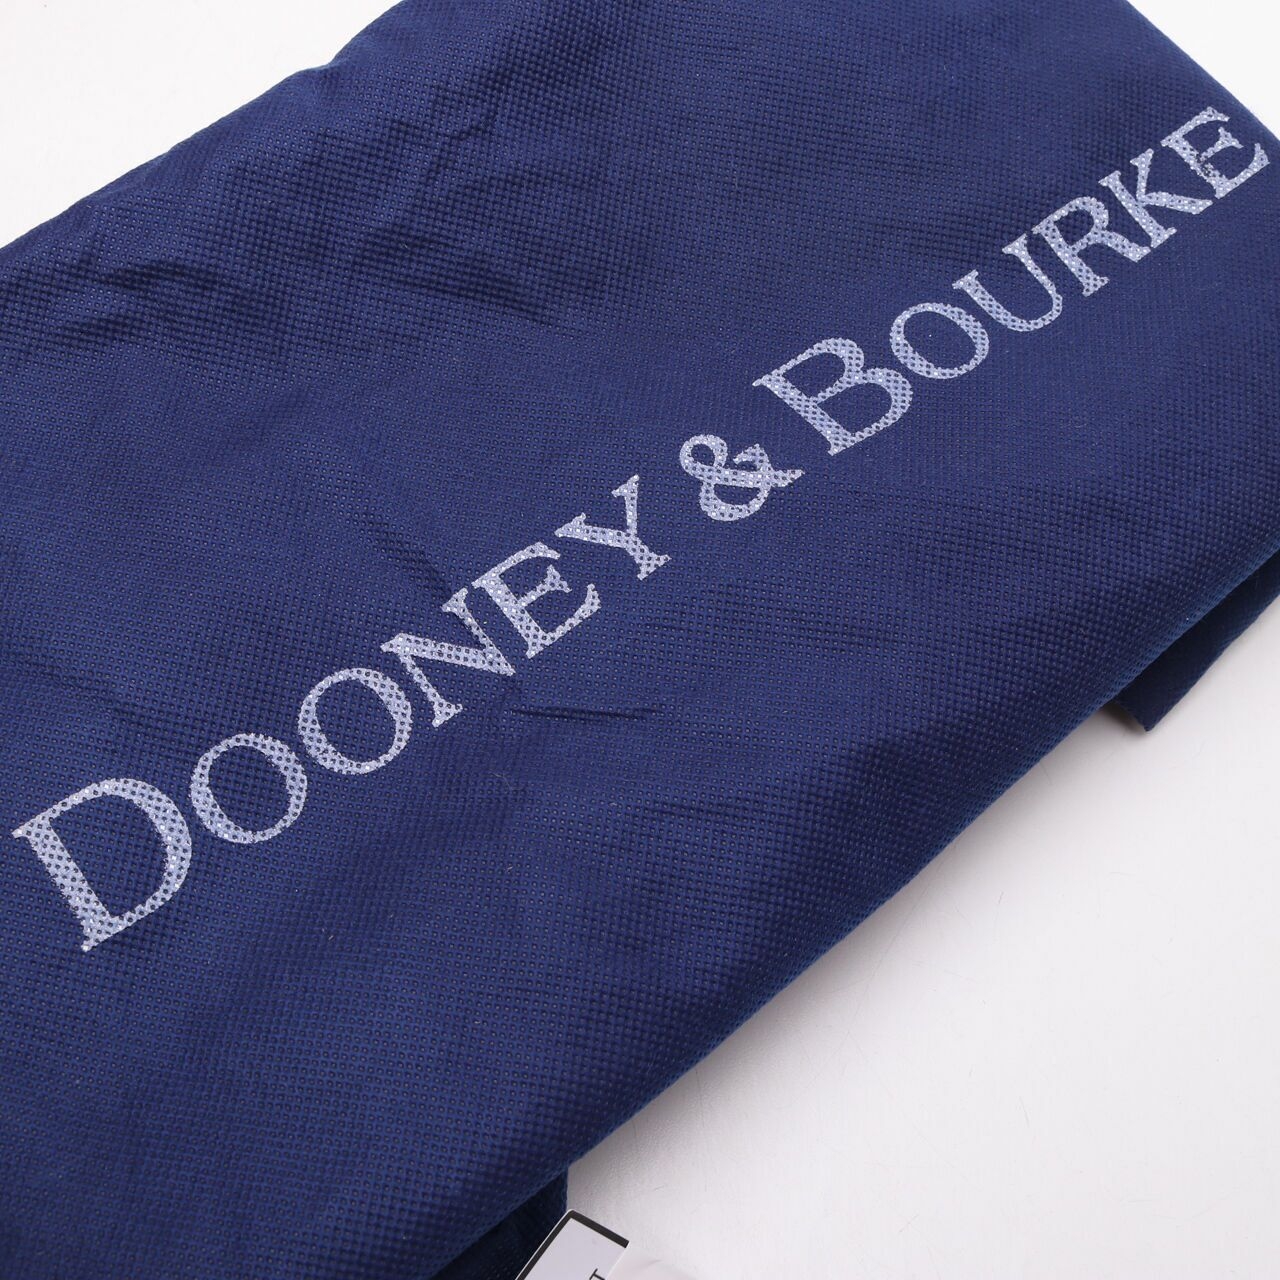 Dooney & Bourke Red Tote Bag